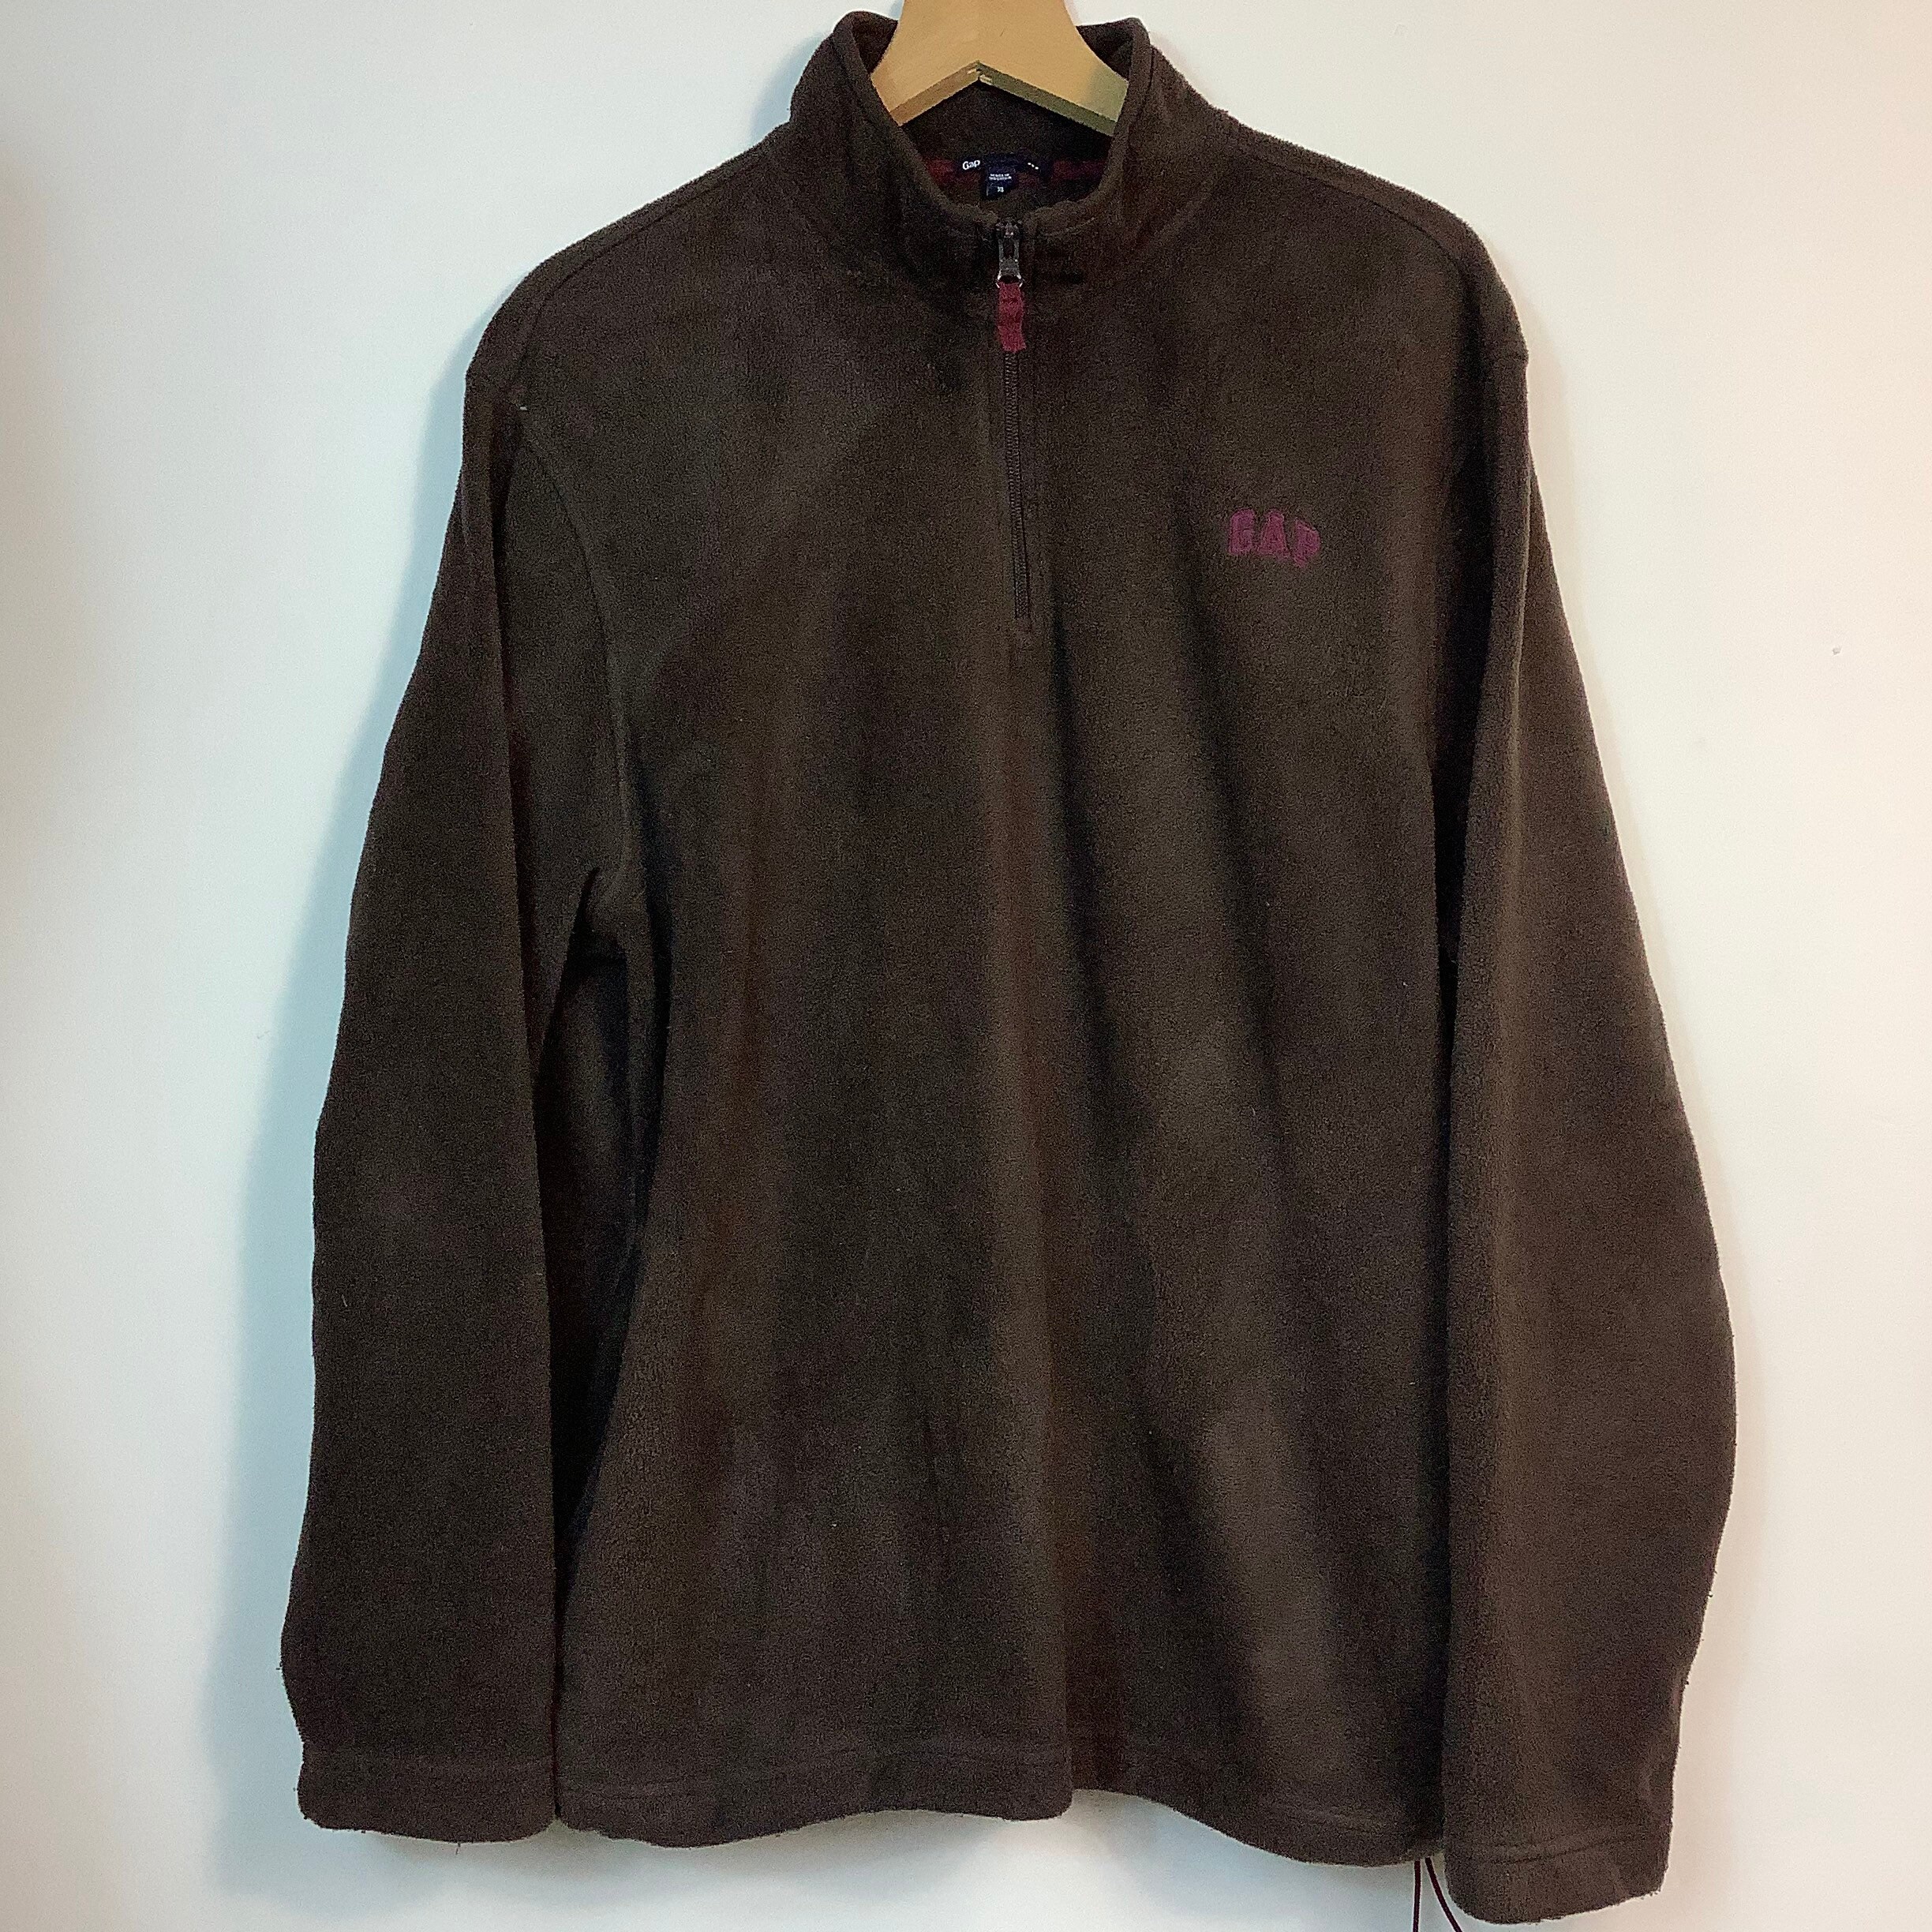 Vintage Gap full zip fleece jacket | Etsy